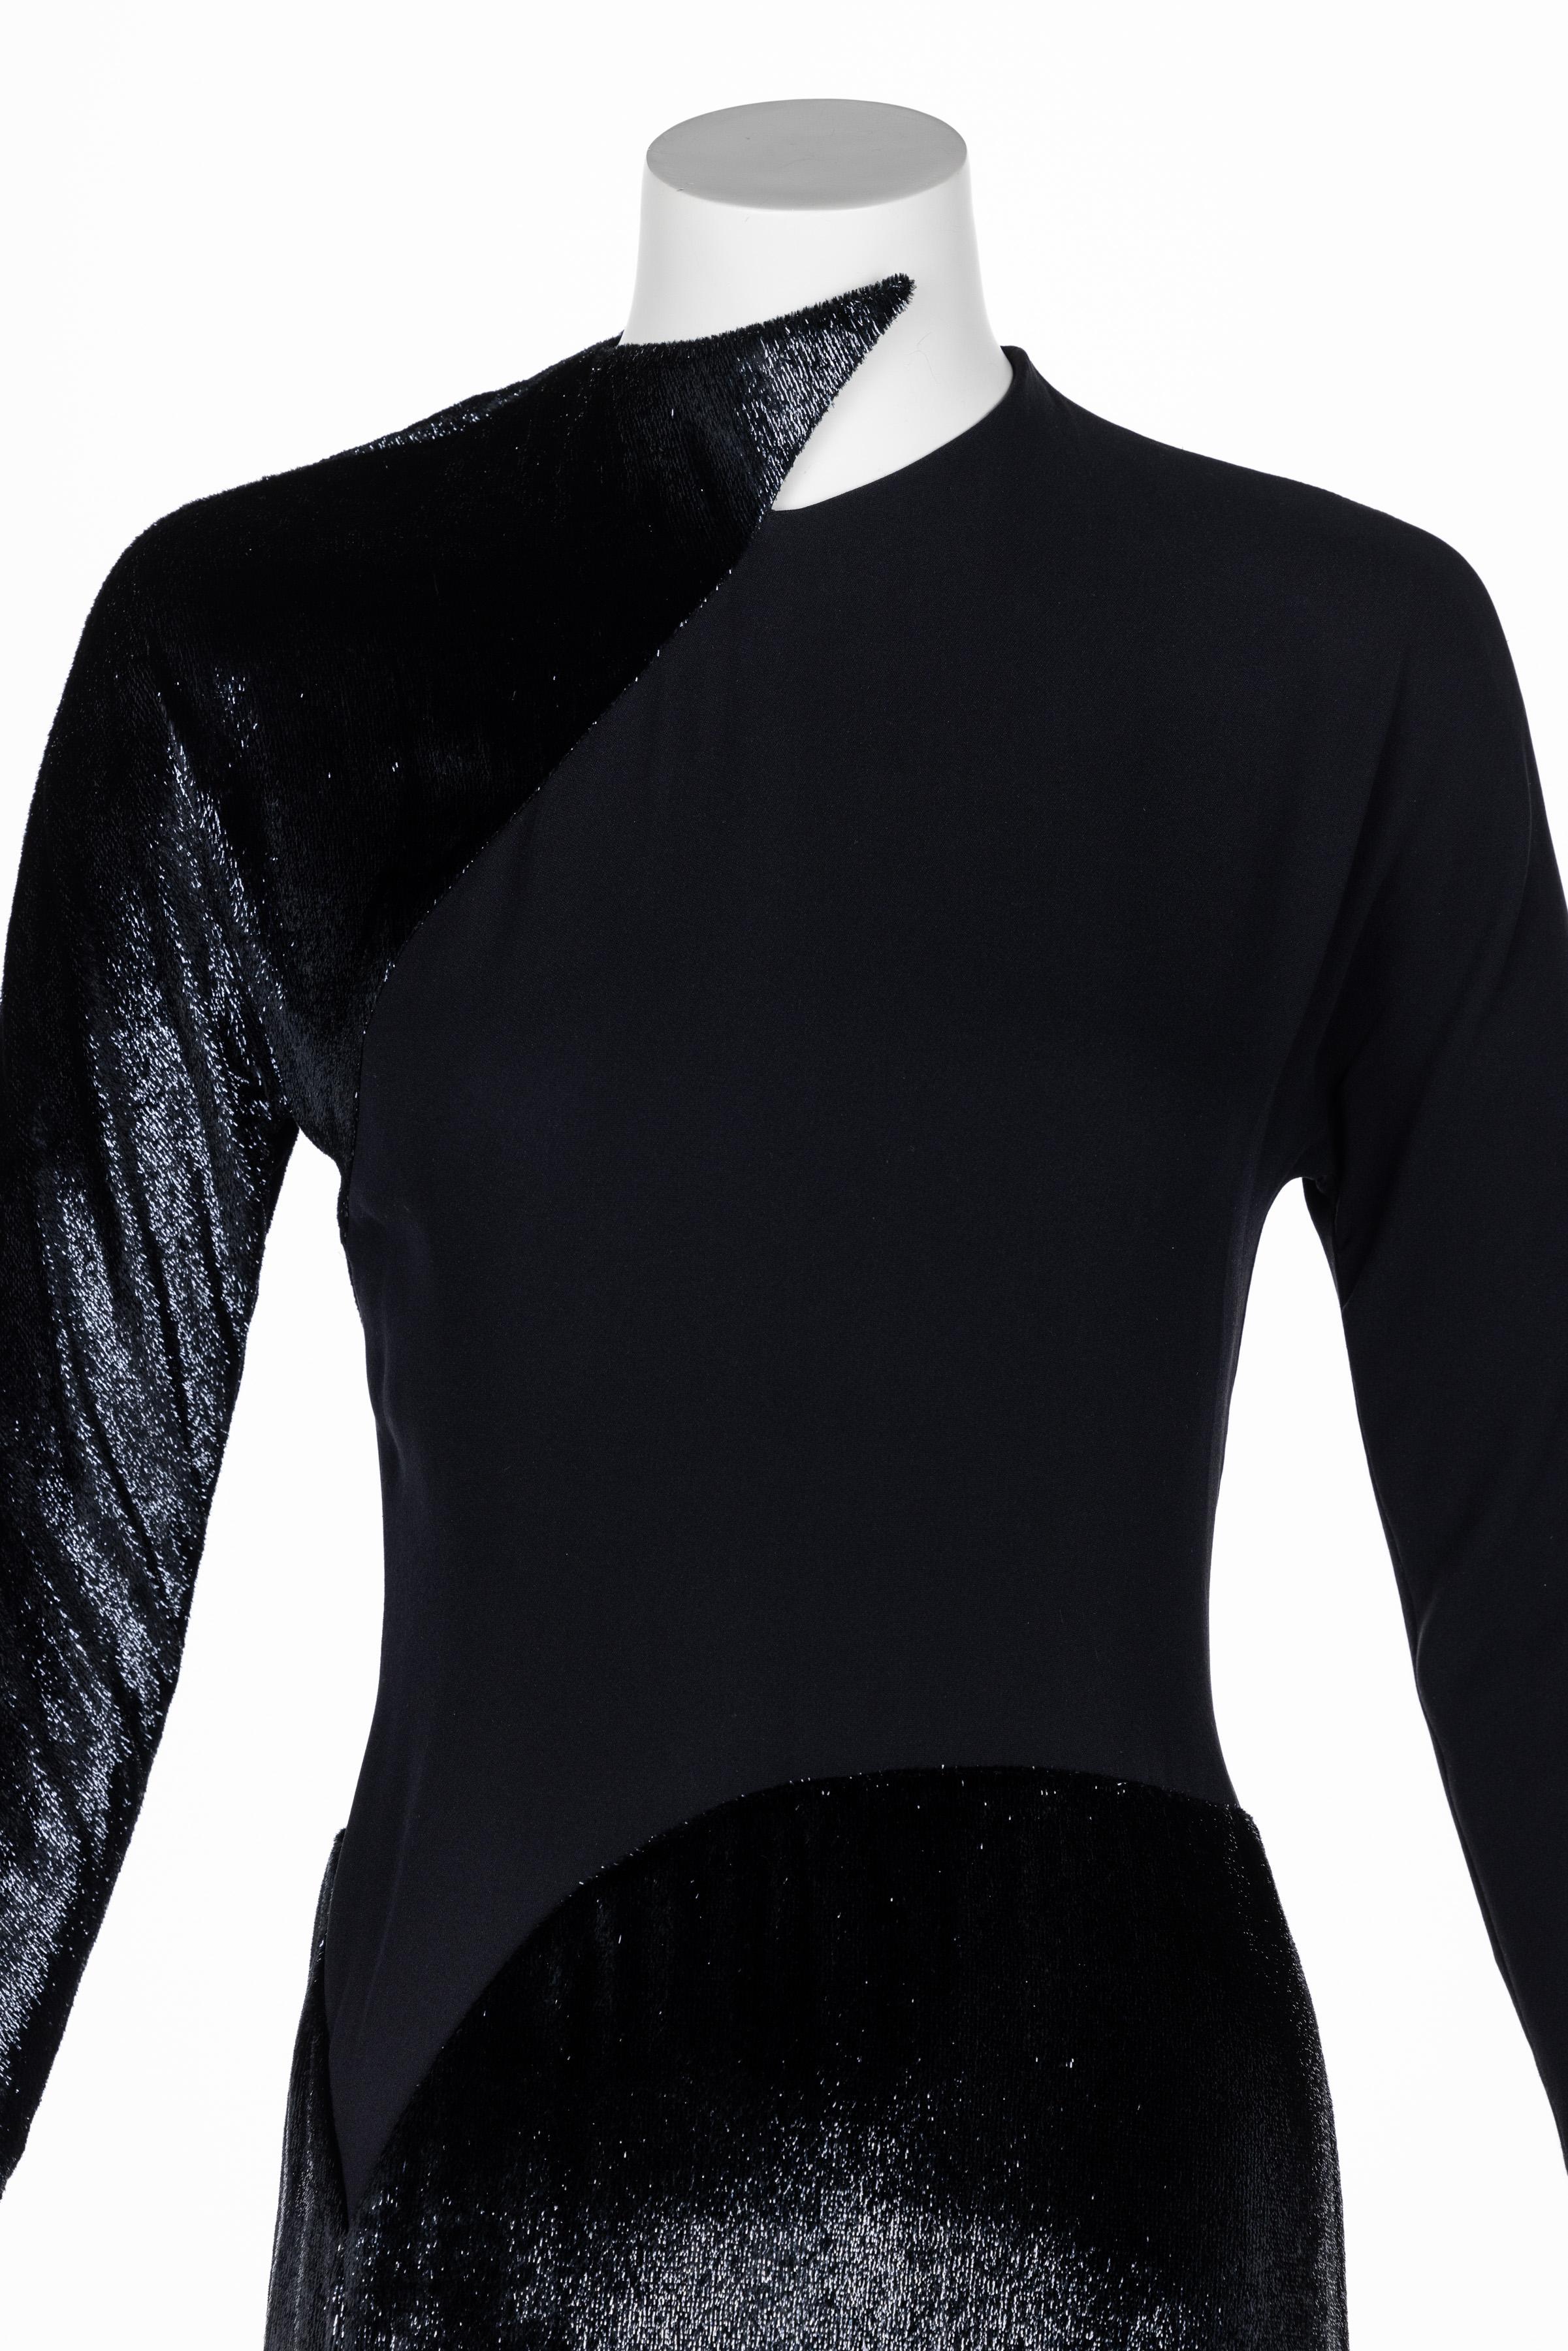 Geoffrey Beene Black Crepe Panne Velvet Dress 1990s For Sale 3